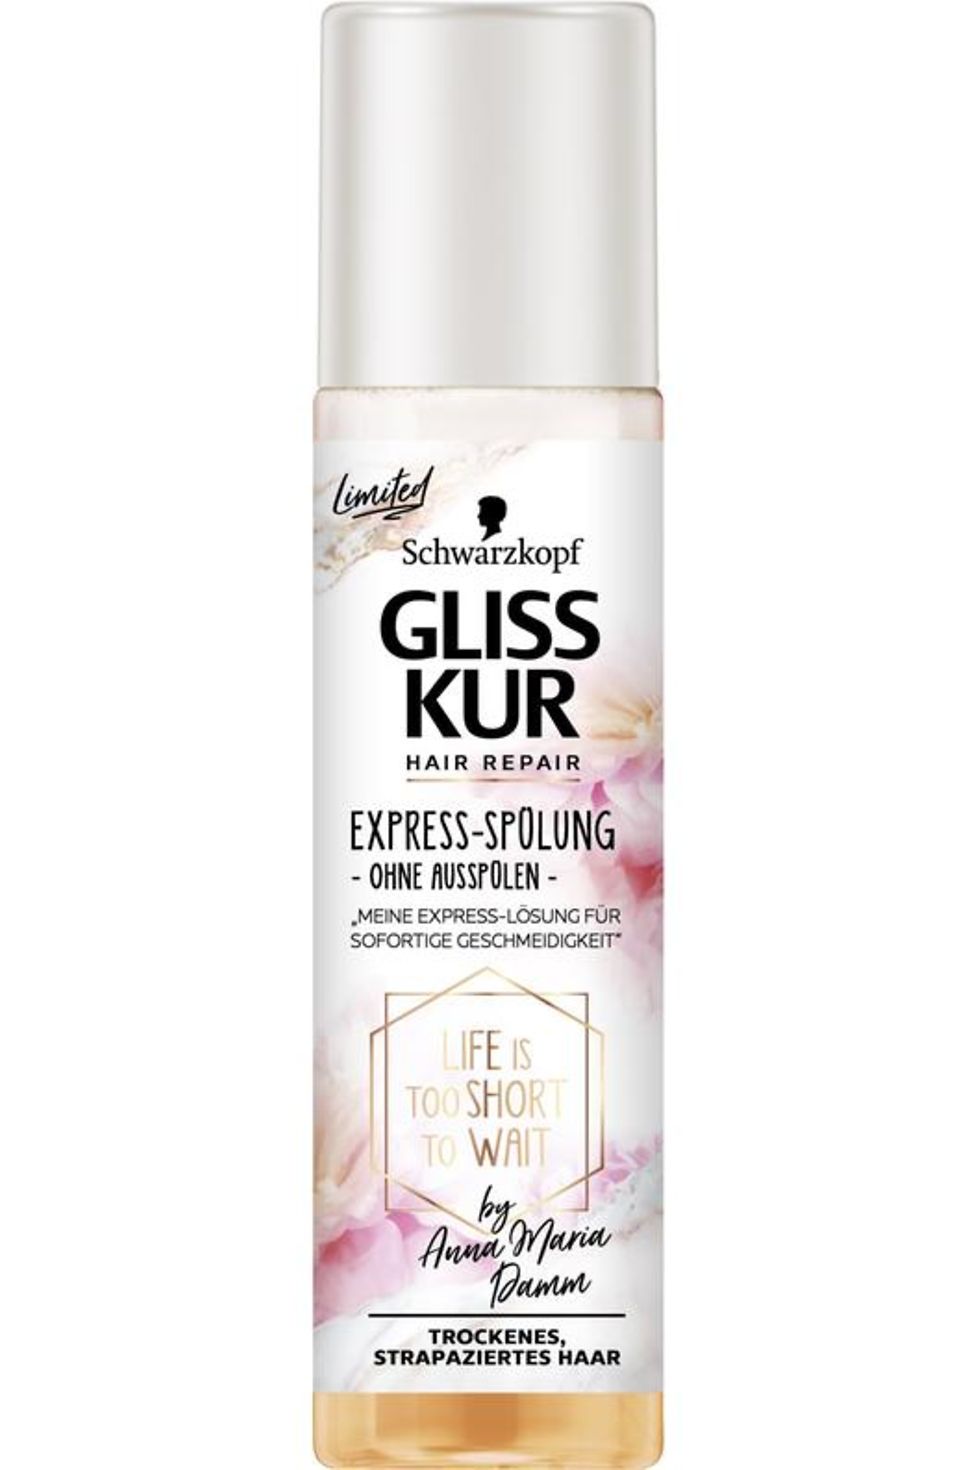 Gliss Kur Hair Repair Express-Spülung – Ohne Ausspülen by Anna Maria Damm